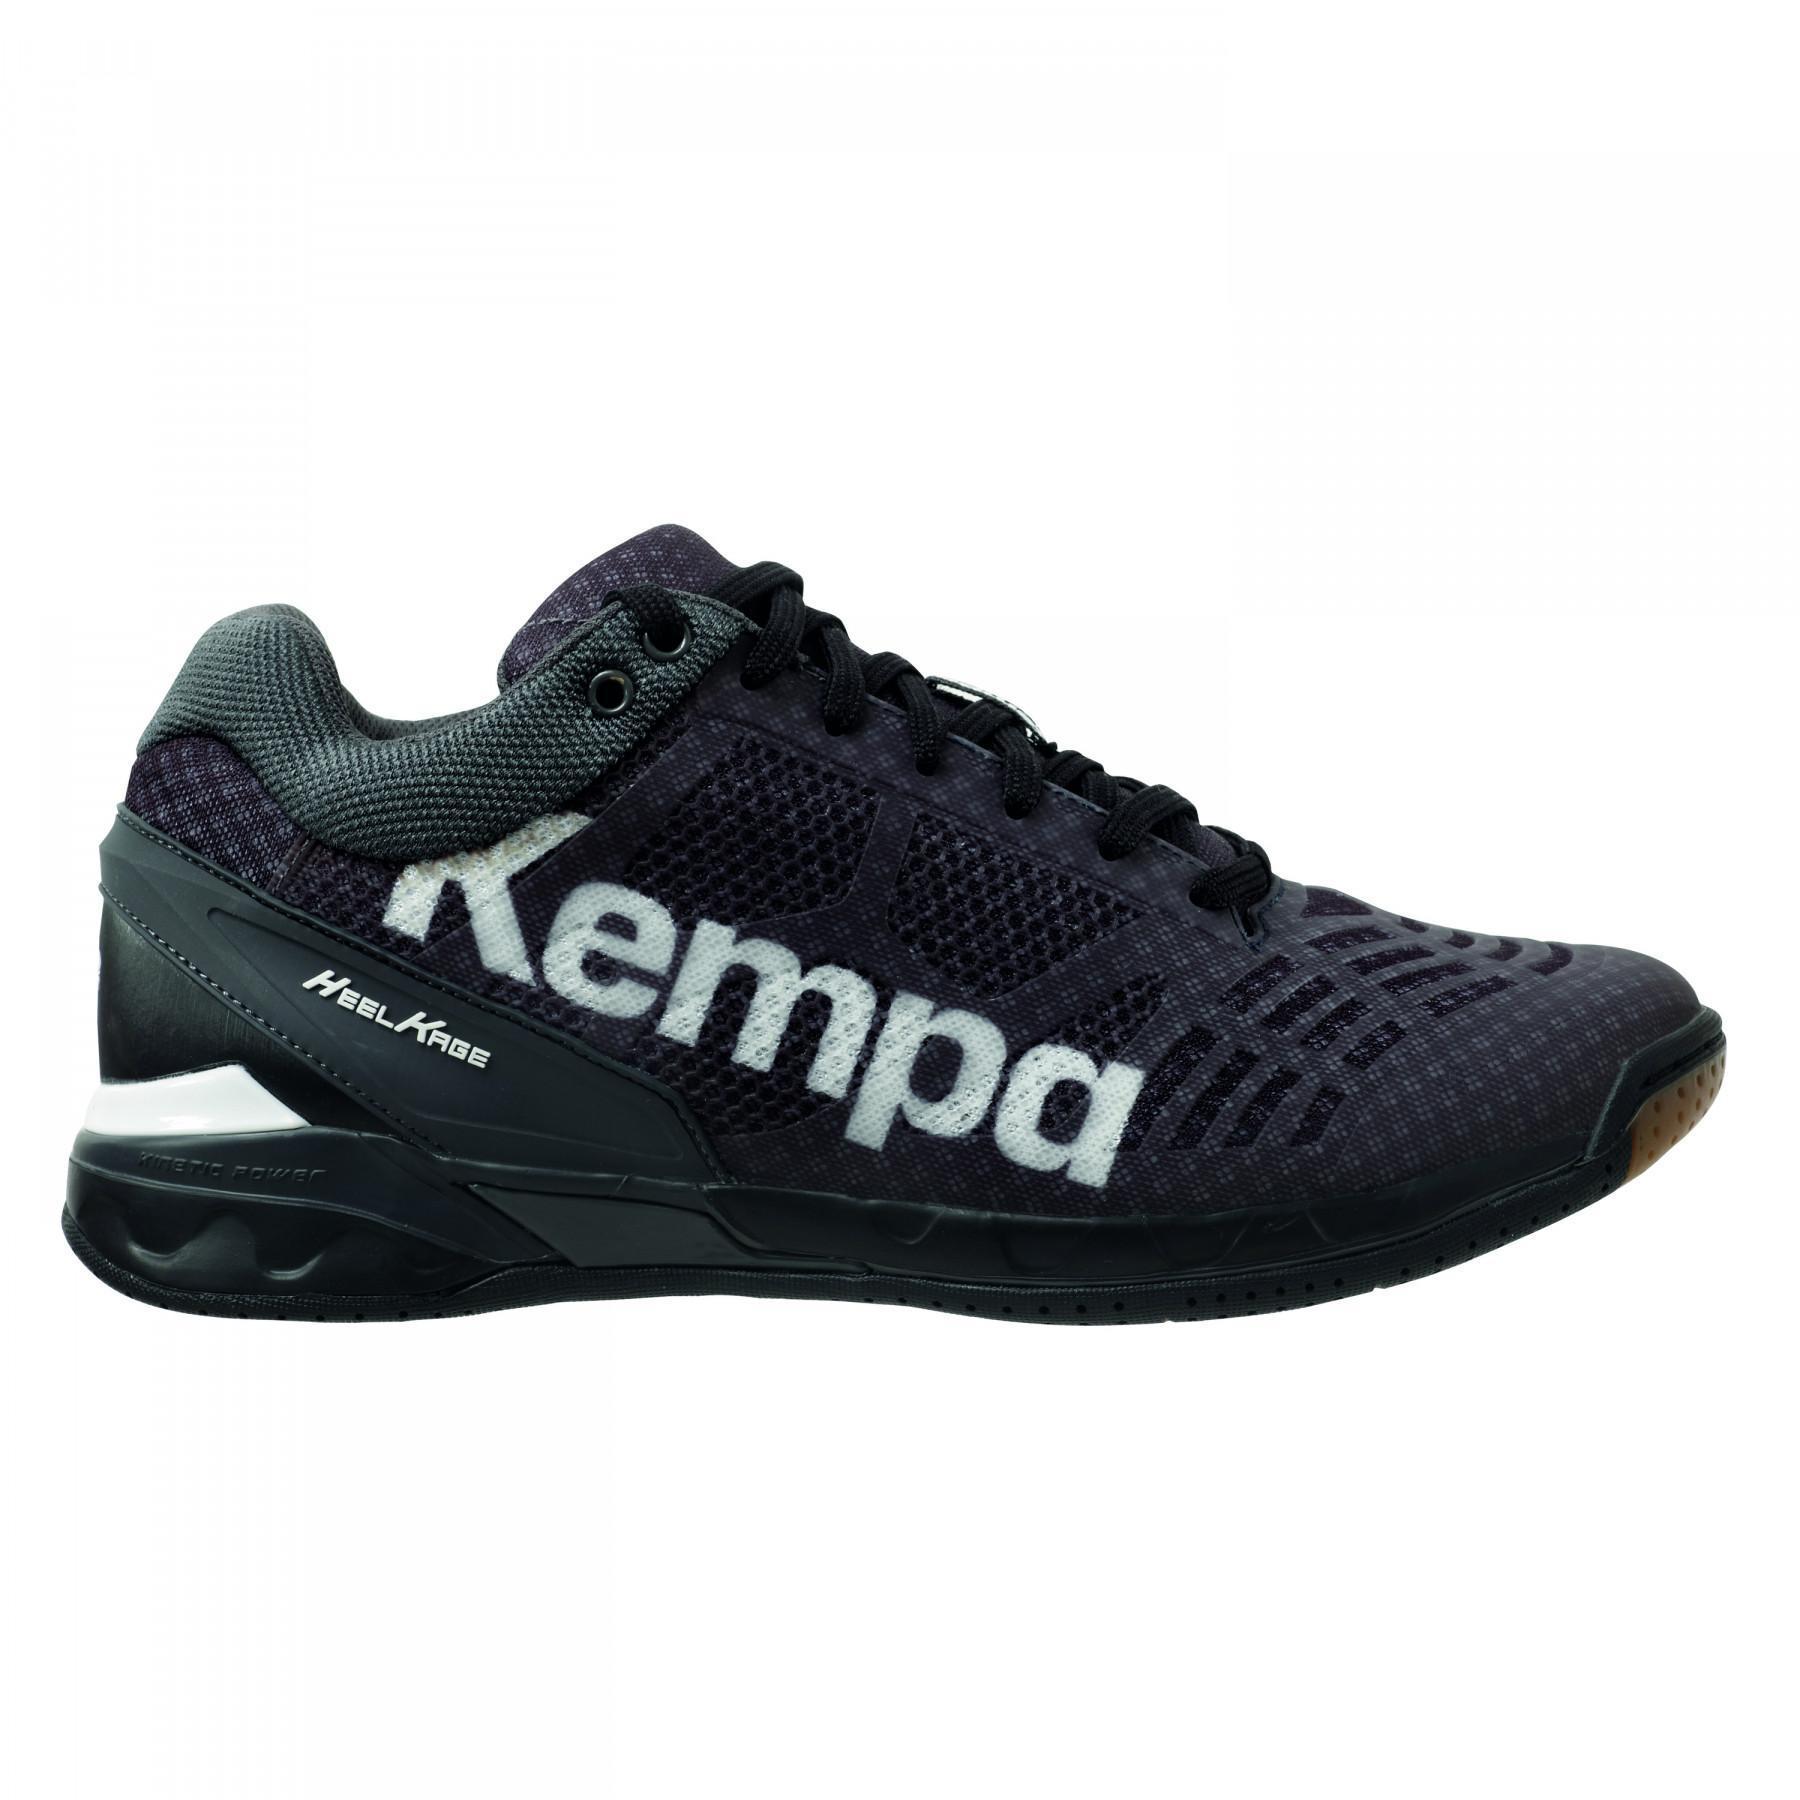 Shoes Kempa Attack Midcut